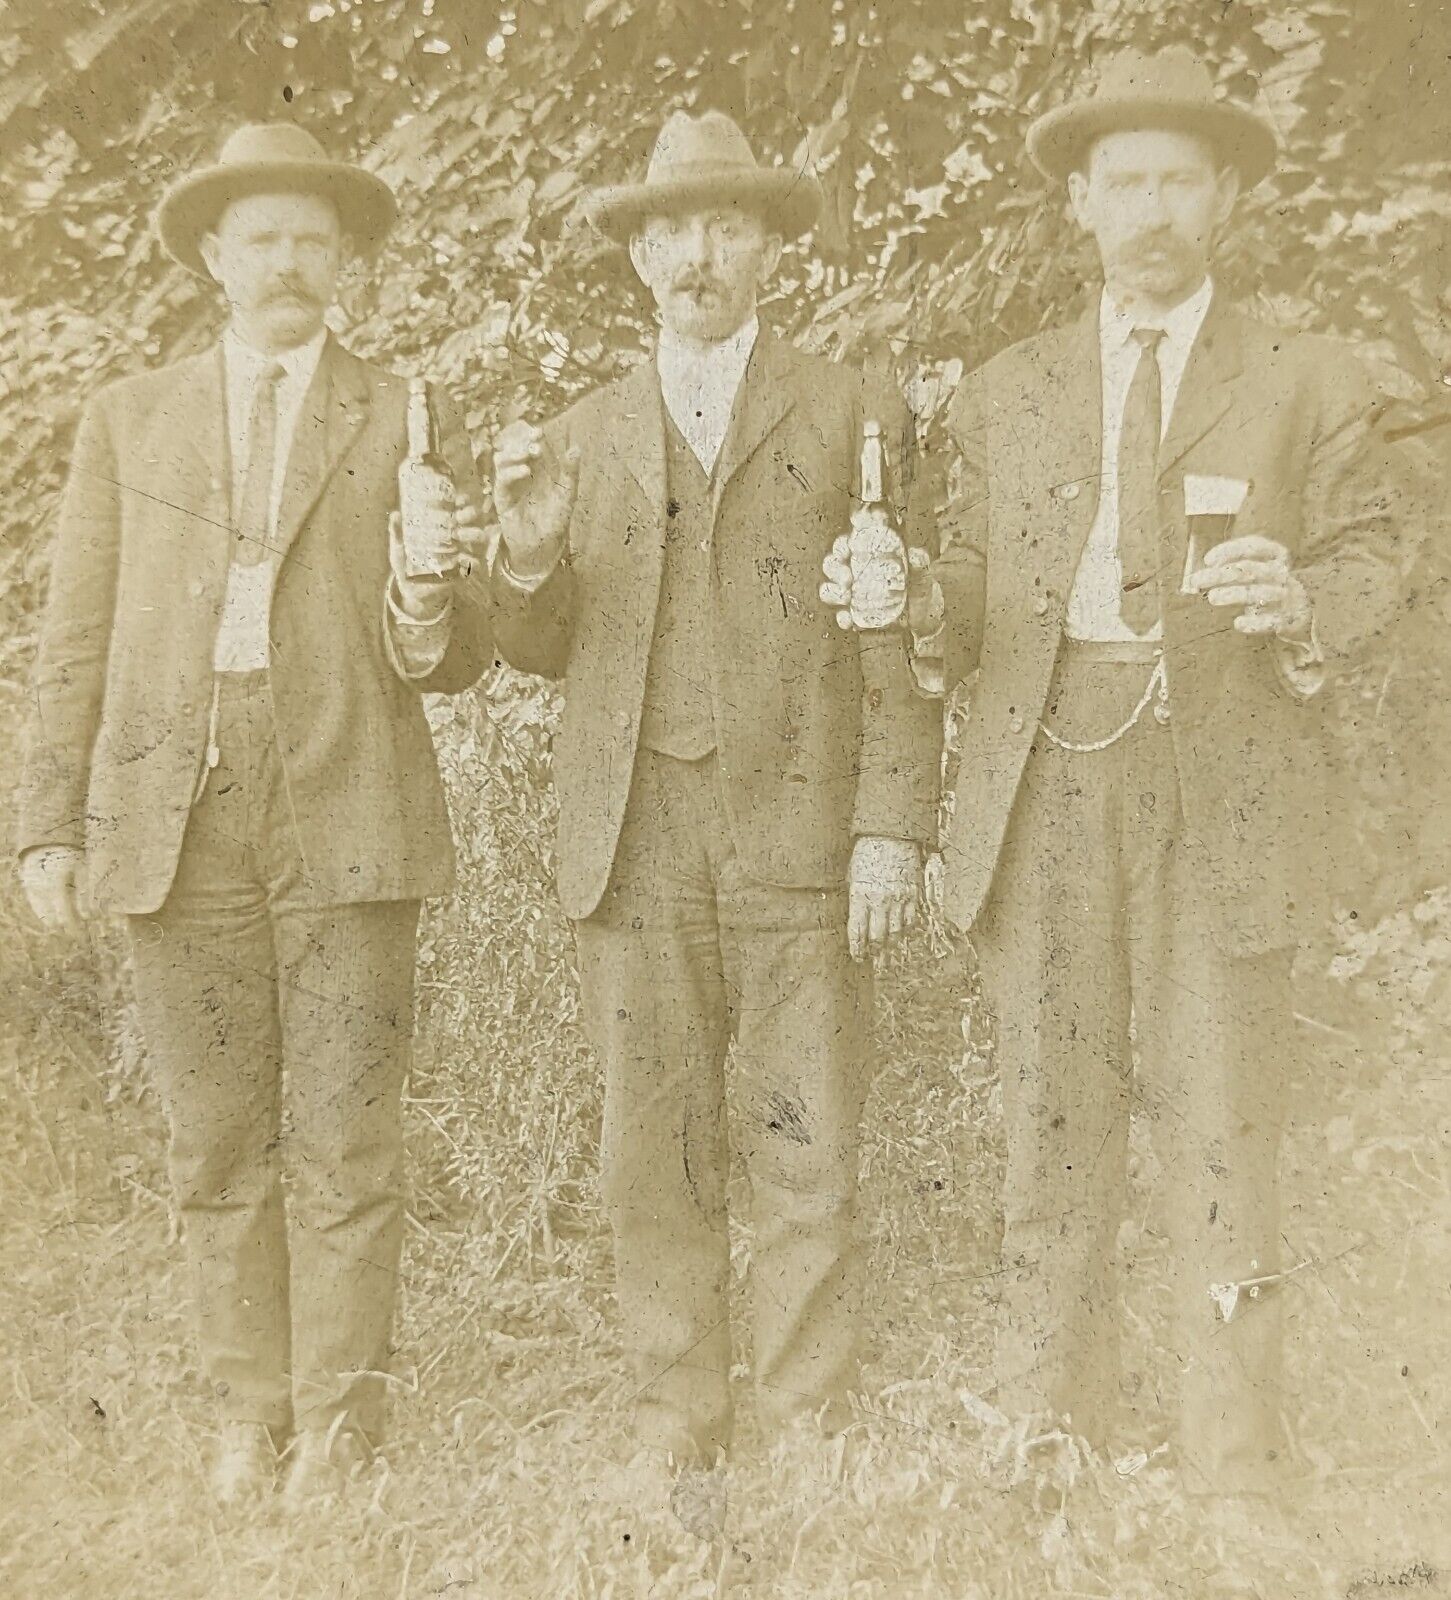 Three Men Drinking Beer Antique Photograph Bottles & Glasses, Breweriana